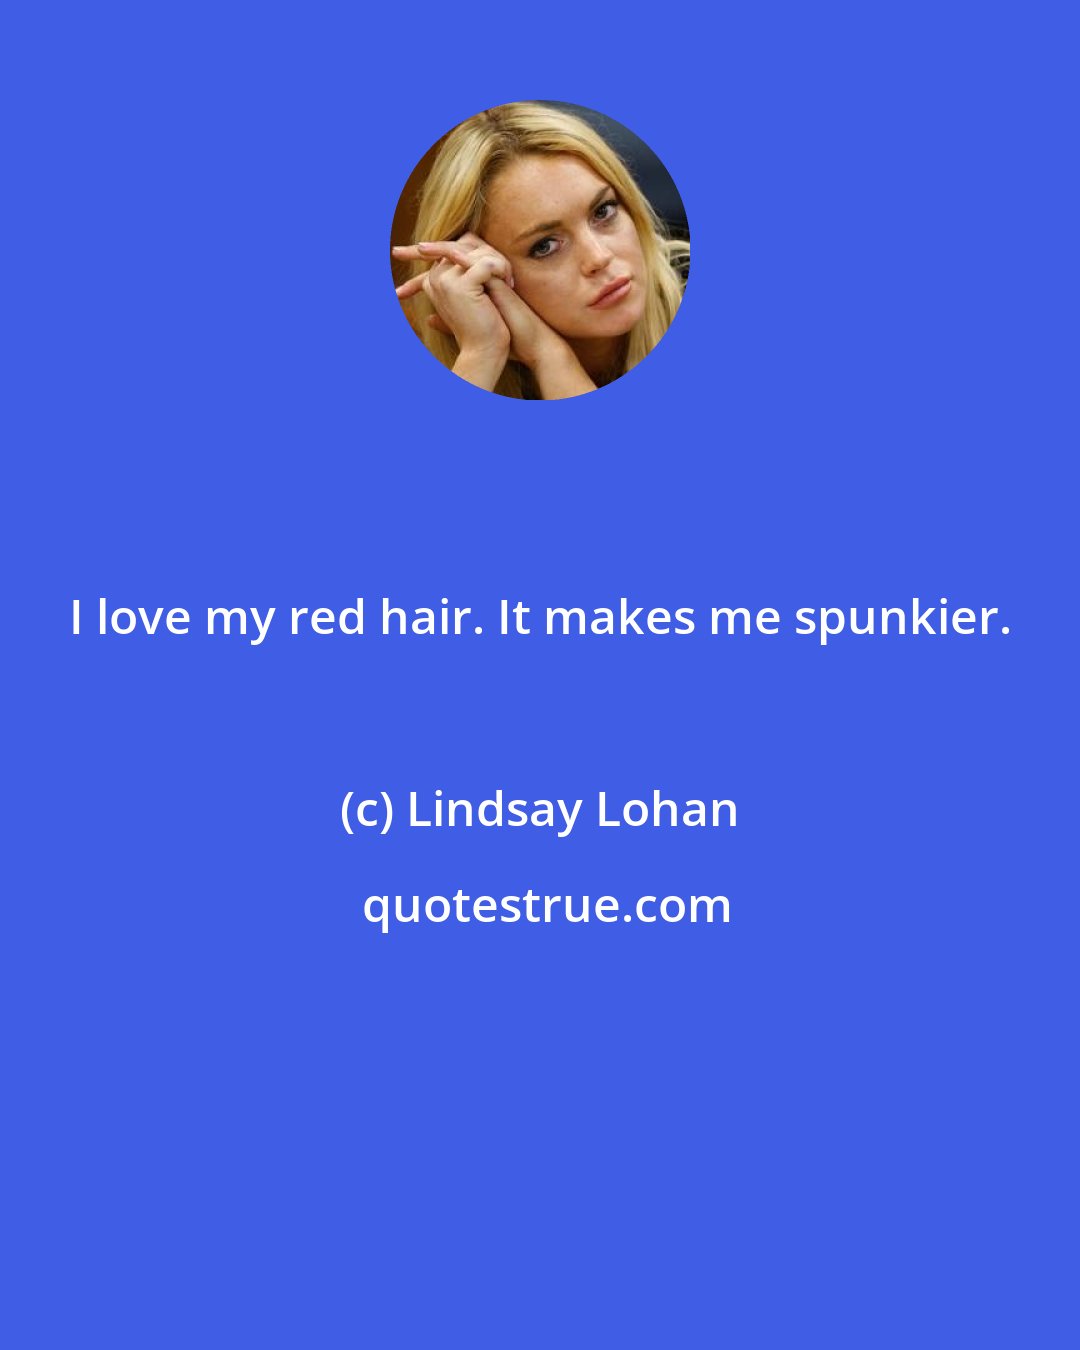 Lindsay Lohan: I love my red hair. It makes me spunkier.